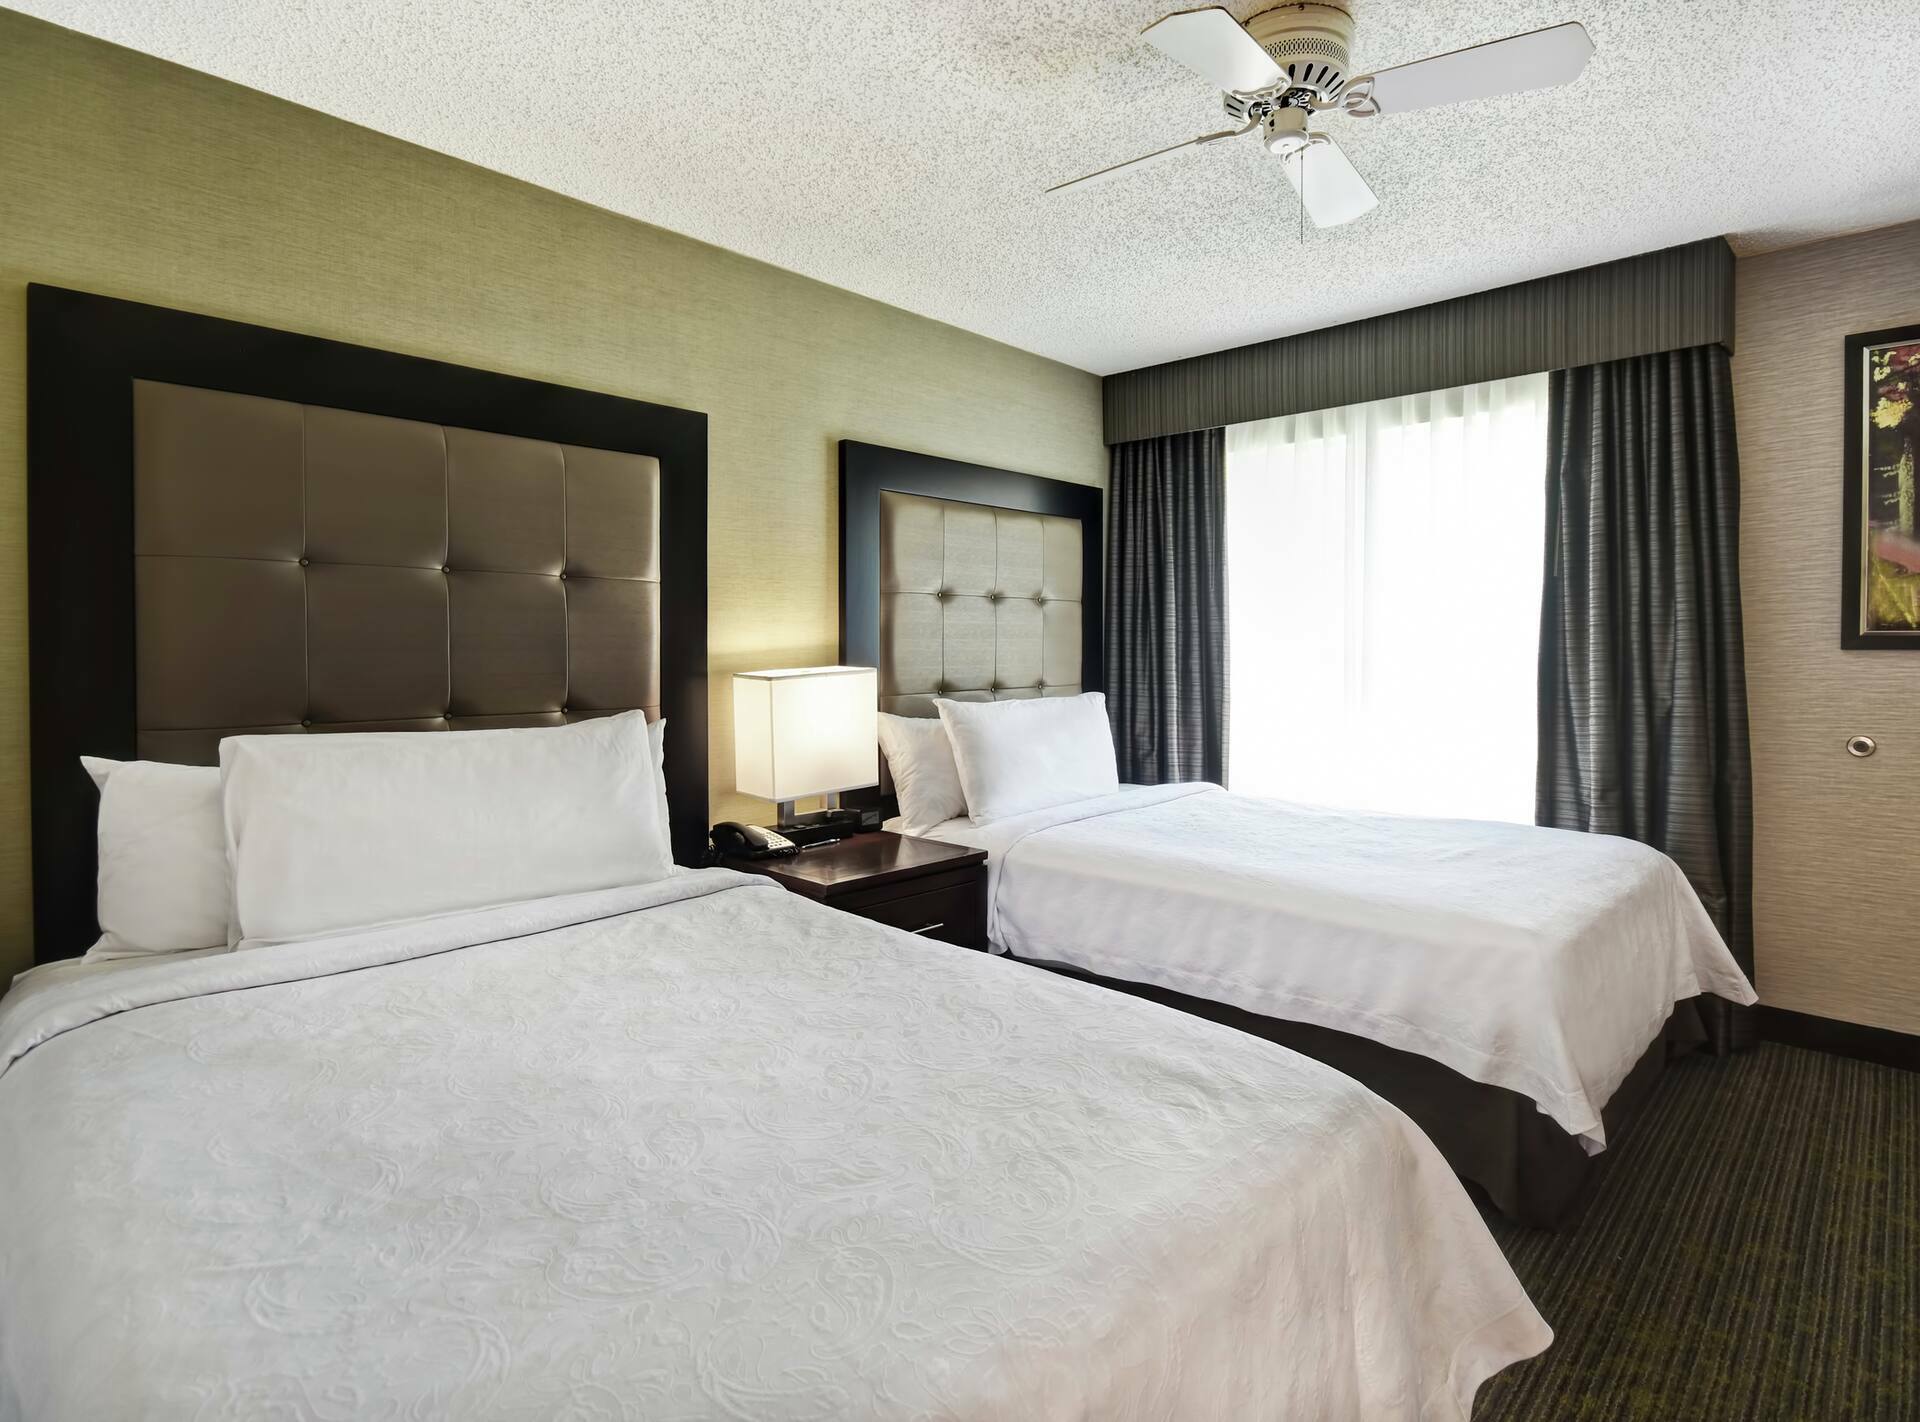 Photo of Homewood Suites by Hilton Atlanta-Galleria/Cumberland, Atlanta, GA